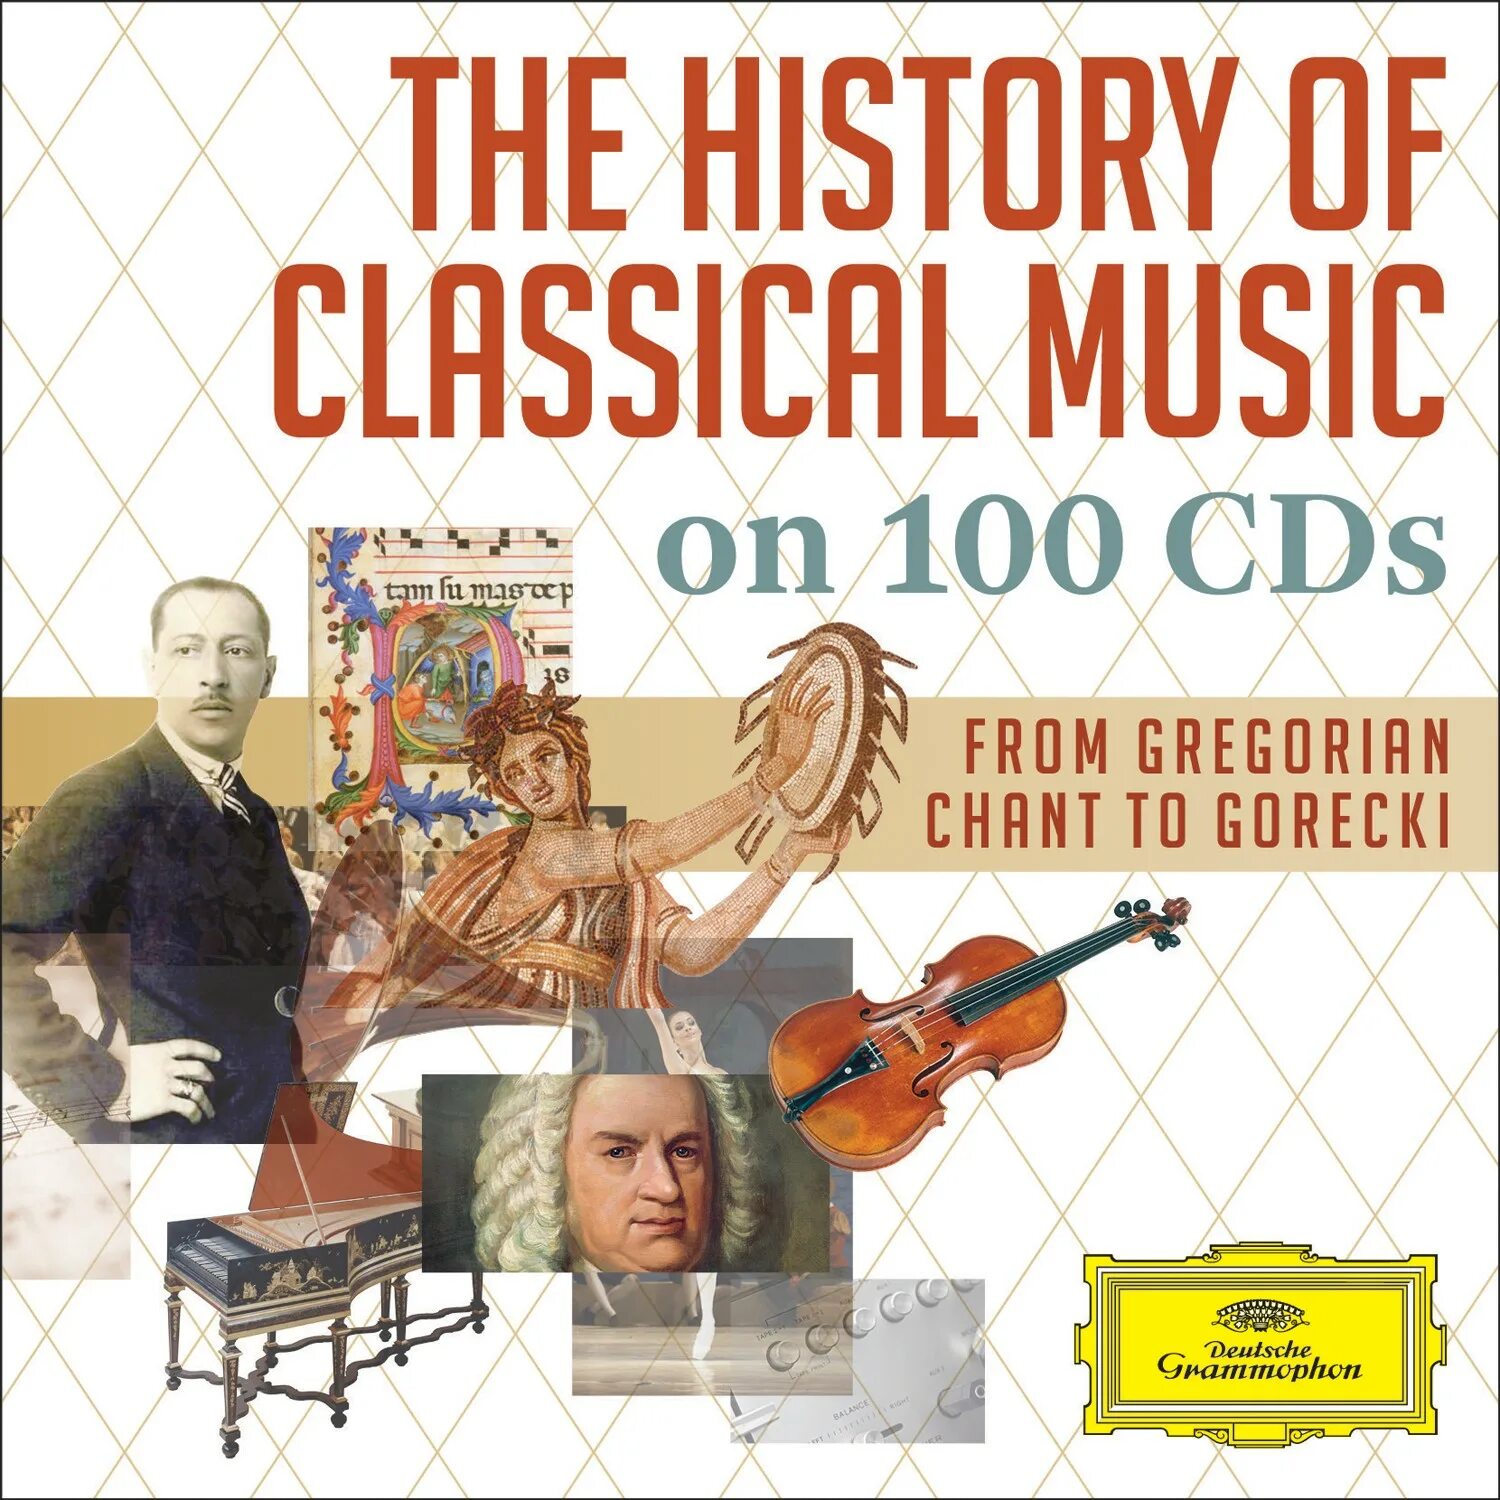 Классическая музыка купить. The History of Classical Music on 100 CD. История классической музыки. Популярная классическая музыка. Classical Music 100 Vol.1.